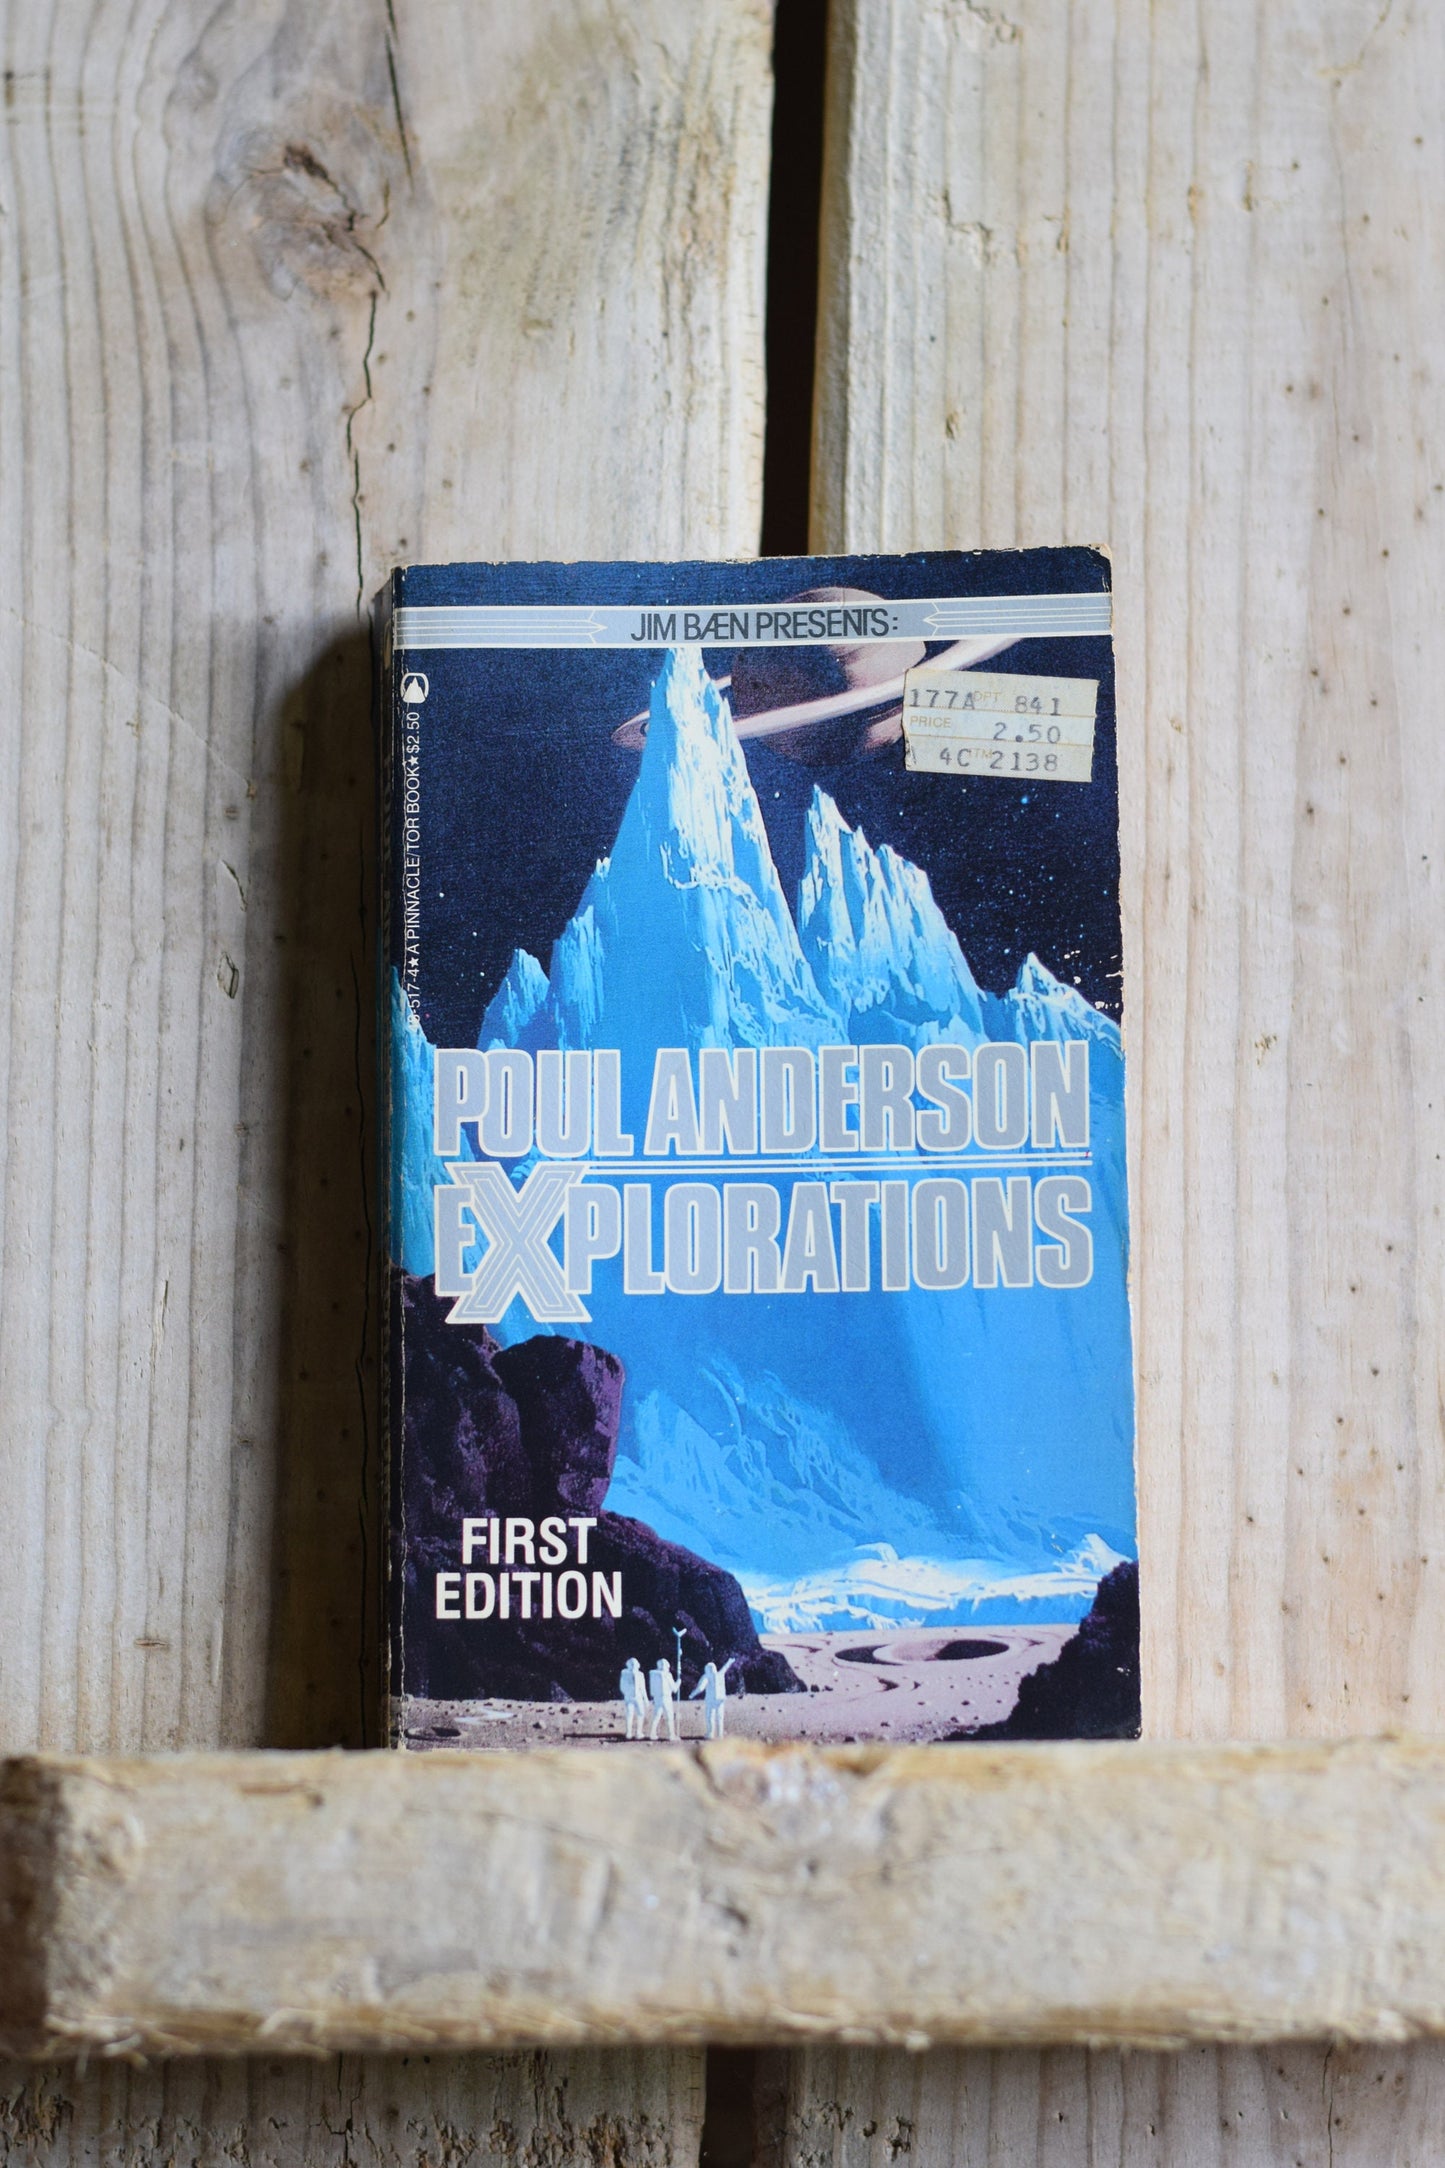 Vintage Sci-fi Paperback Novel: Poul Anderson - Explorations